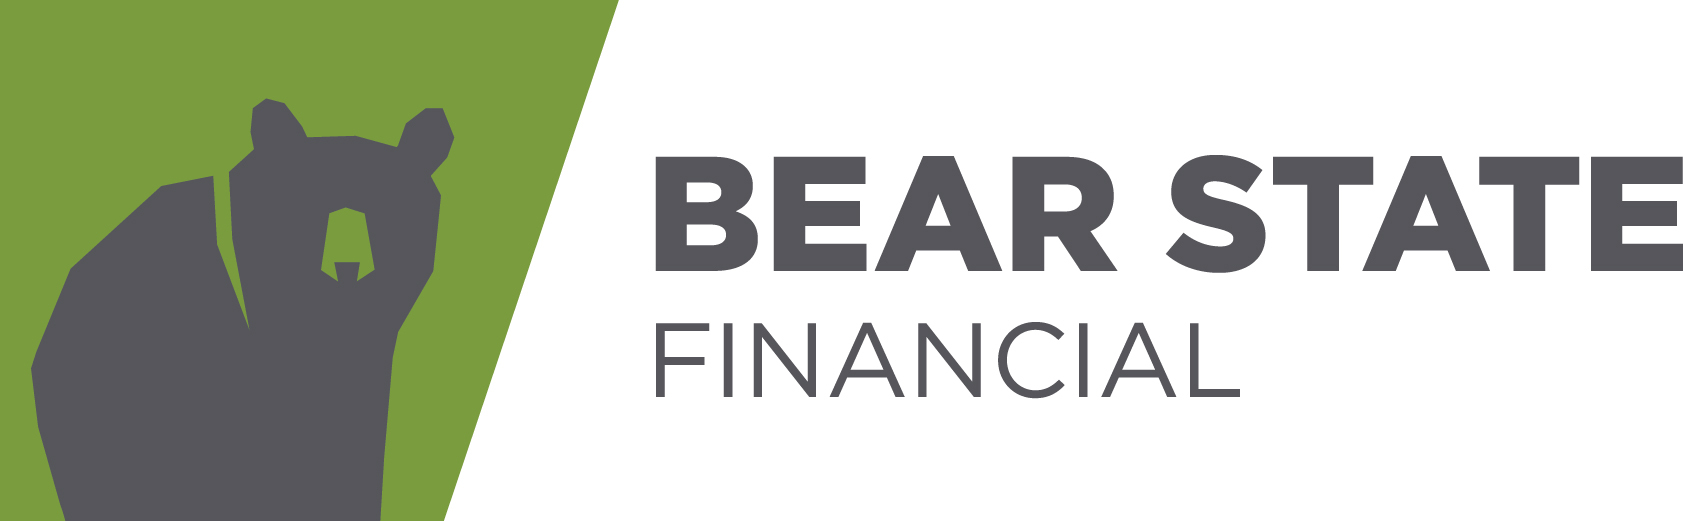 Bear State Financial logo